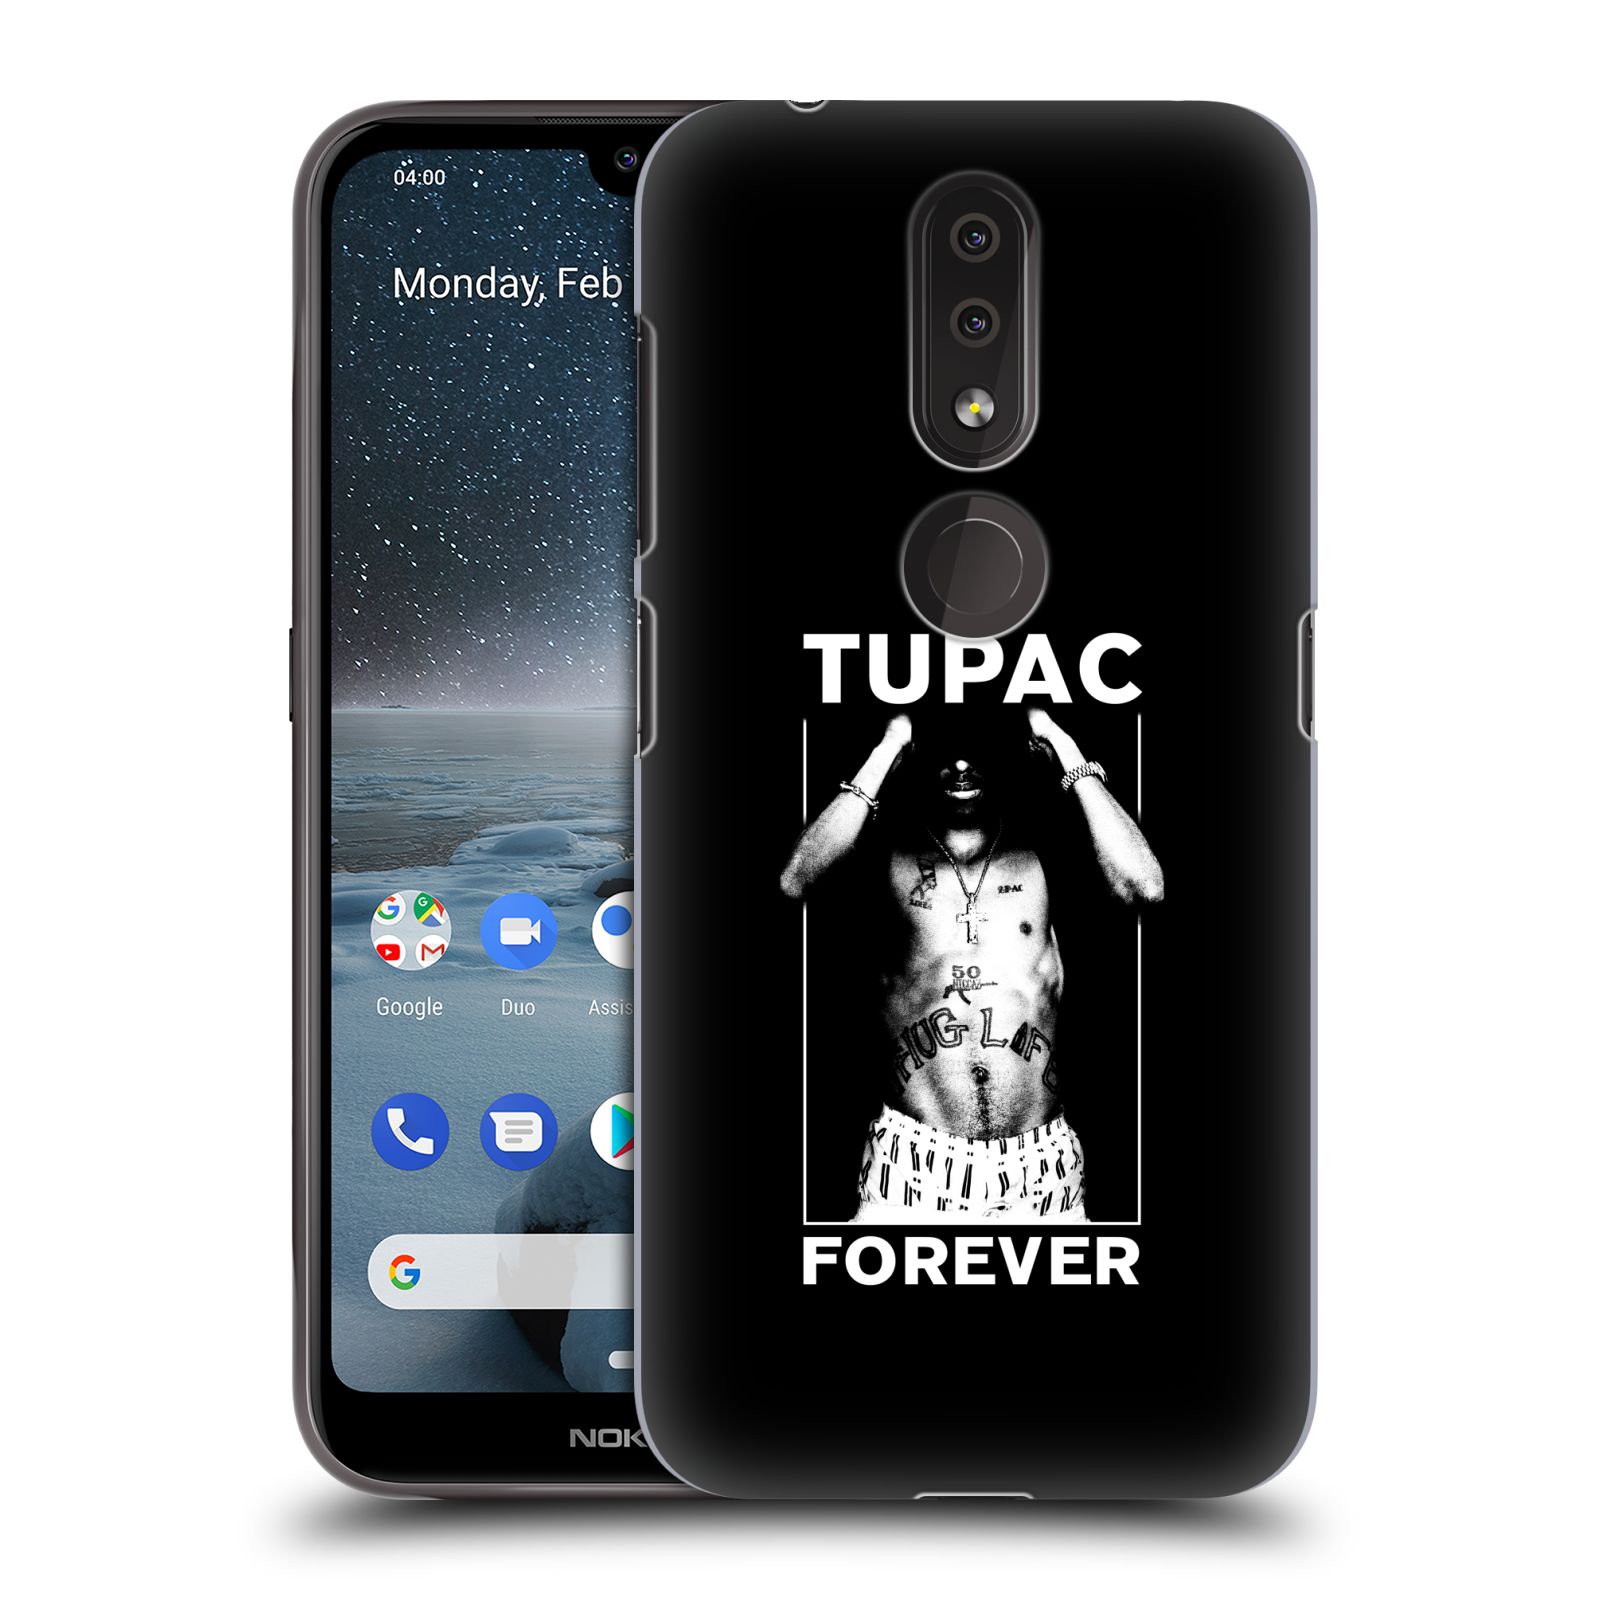 Pouzdro na mobil Nokia 4.2 - HEAD CASE - Zpěvák rapper Tupac Shakur 2Pac bílý popisek FOREVER